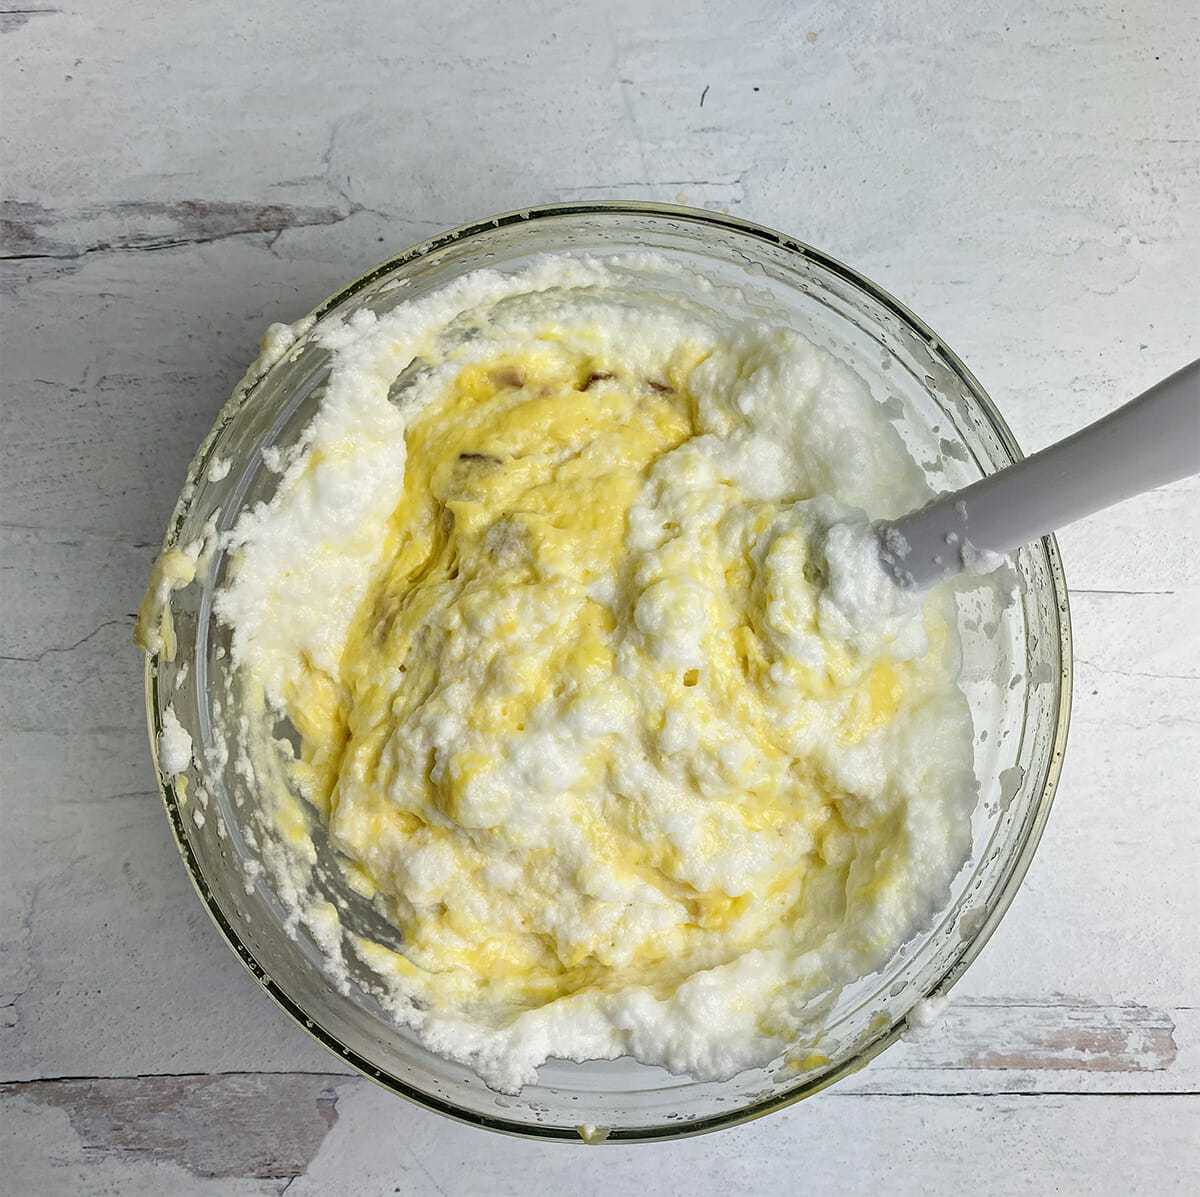 Folding egg whites into souffle mixture.